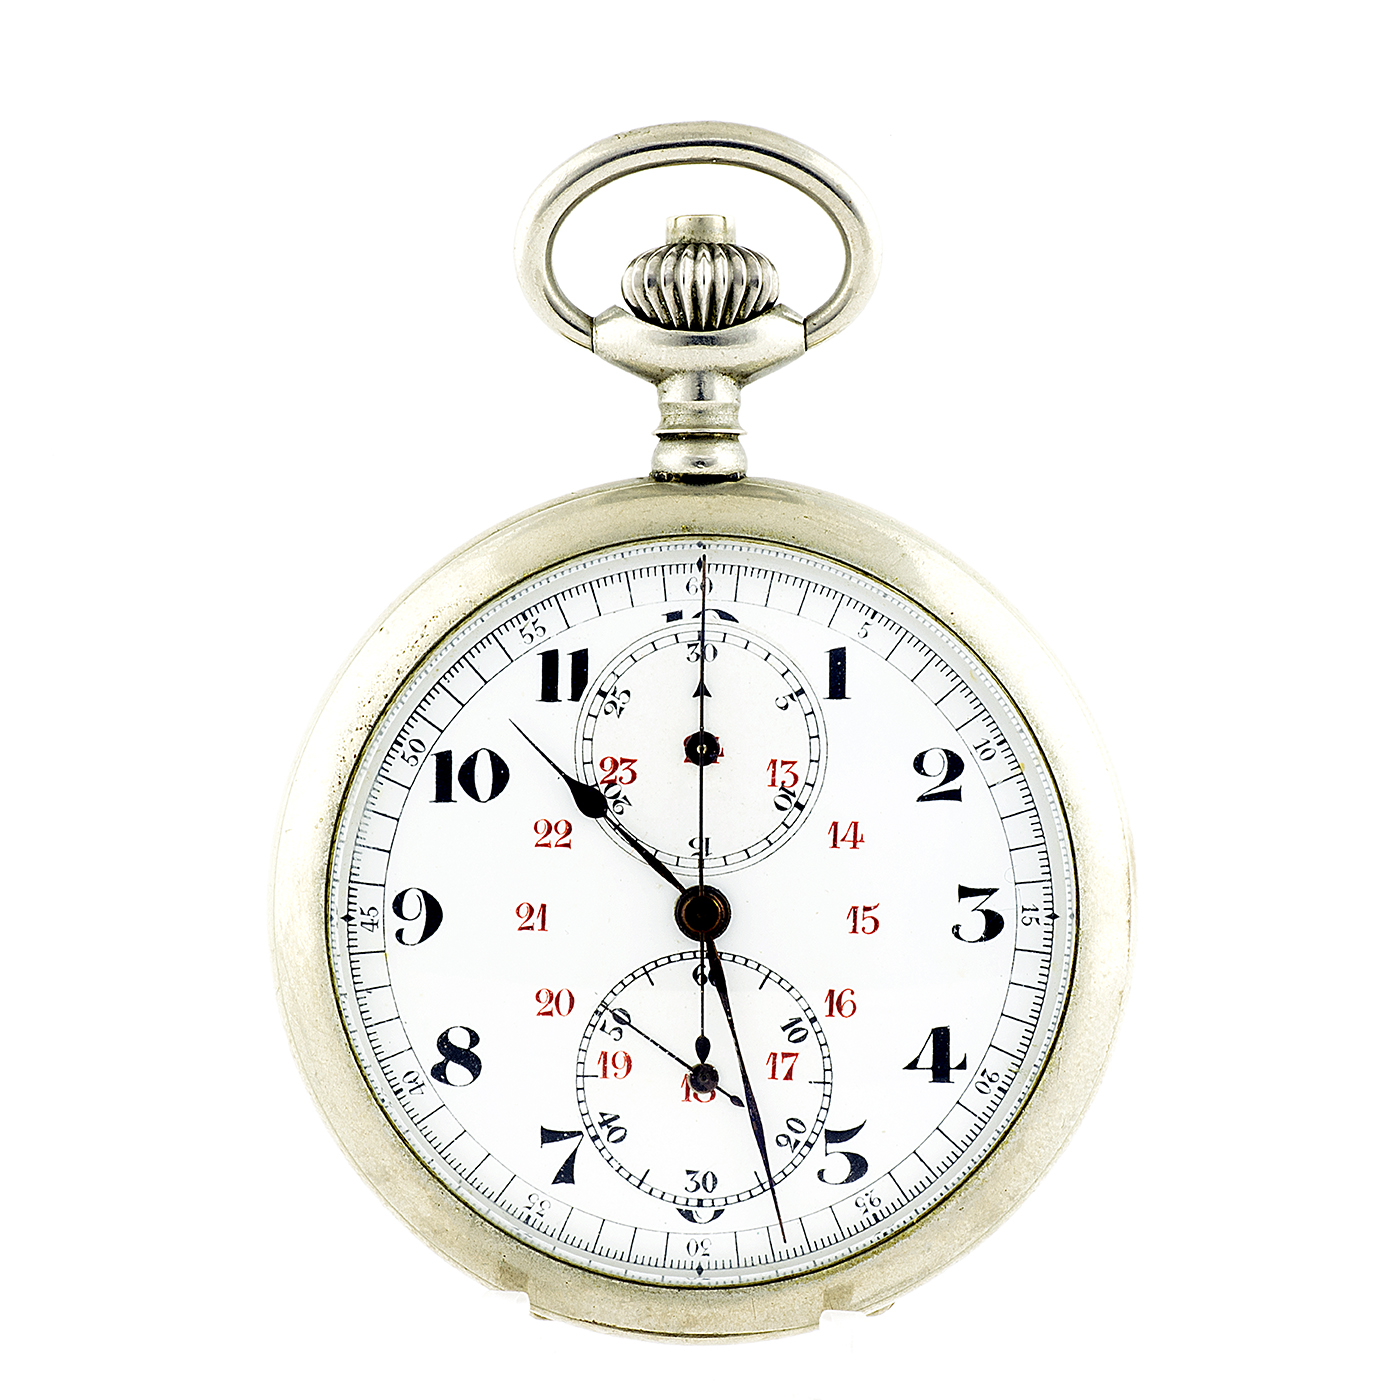 Reloj-Cronómetro Suizo, Lepine y remontoir. Suiza, ca. 1900 Subastas Fígaro